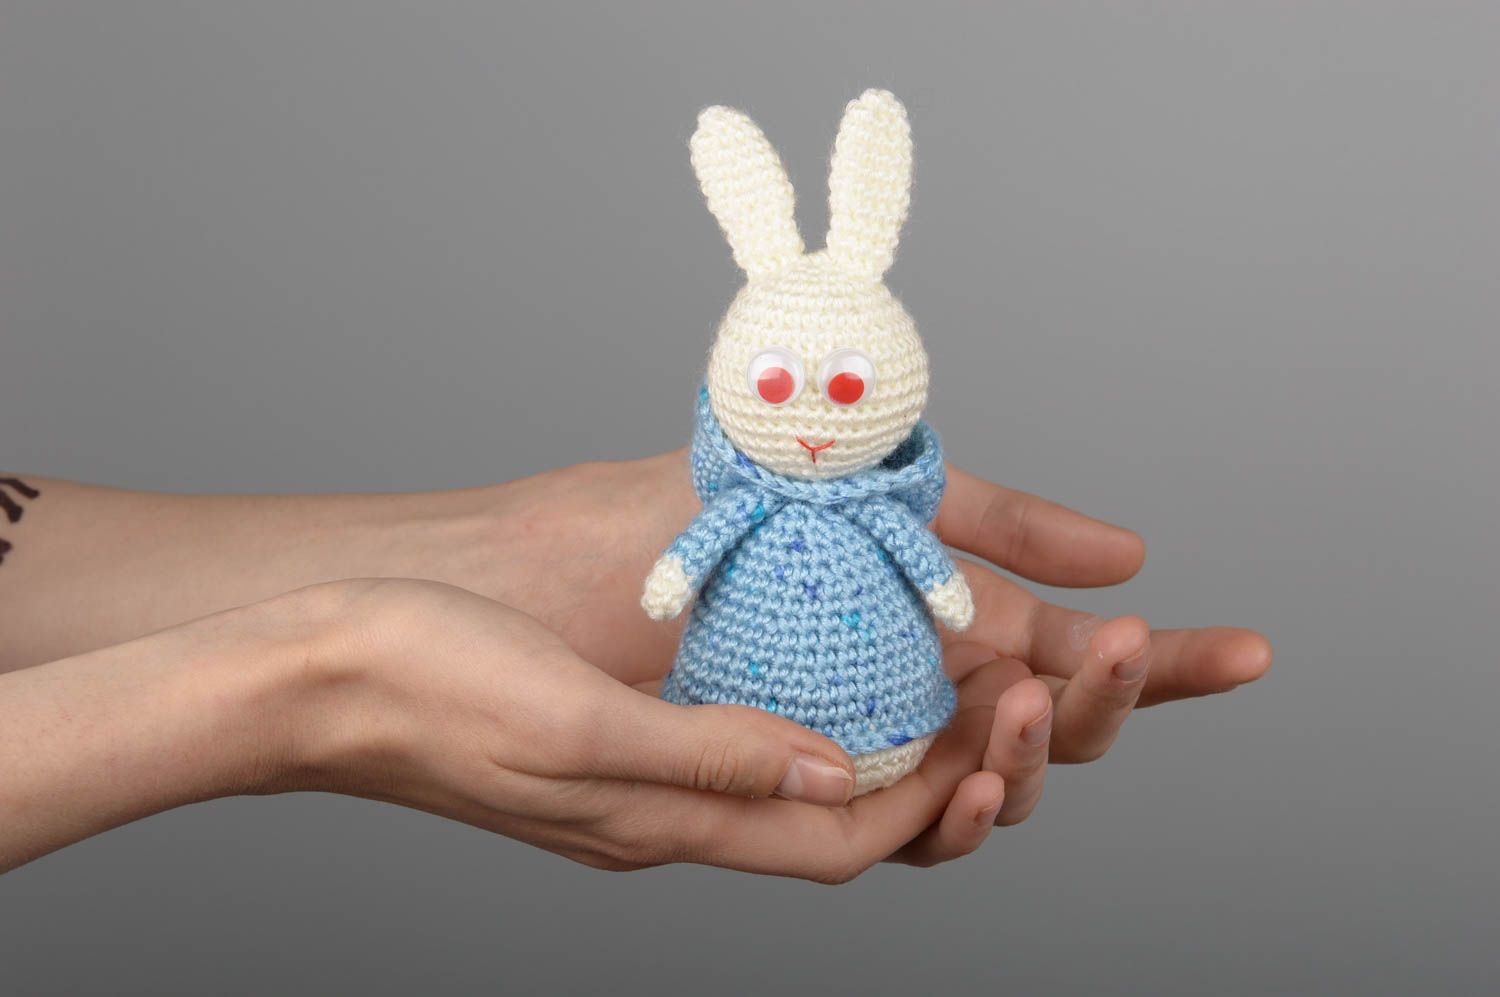 Beautiful handmade crochet toy stuffed toy hare interior decorating gift ideas photo 5